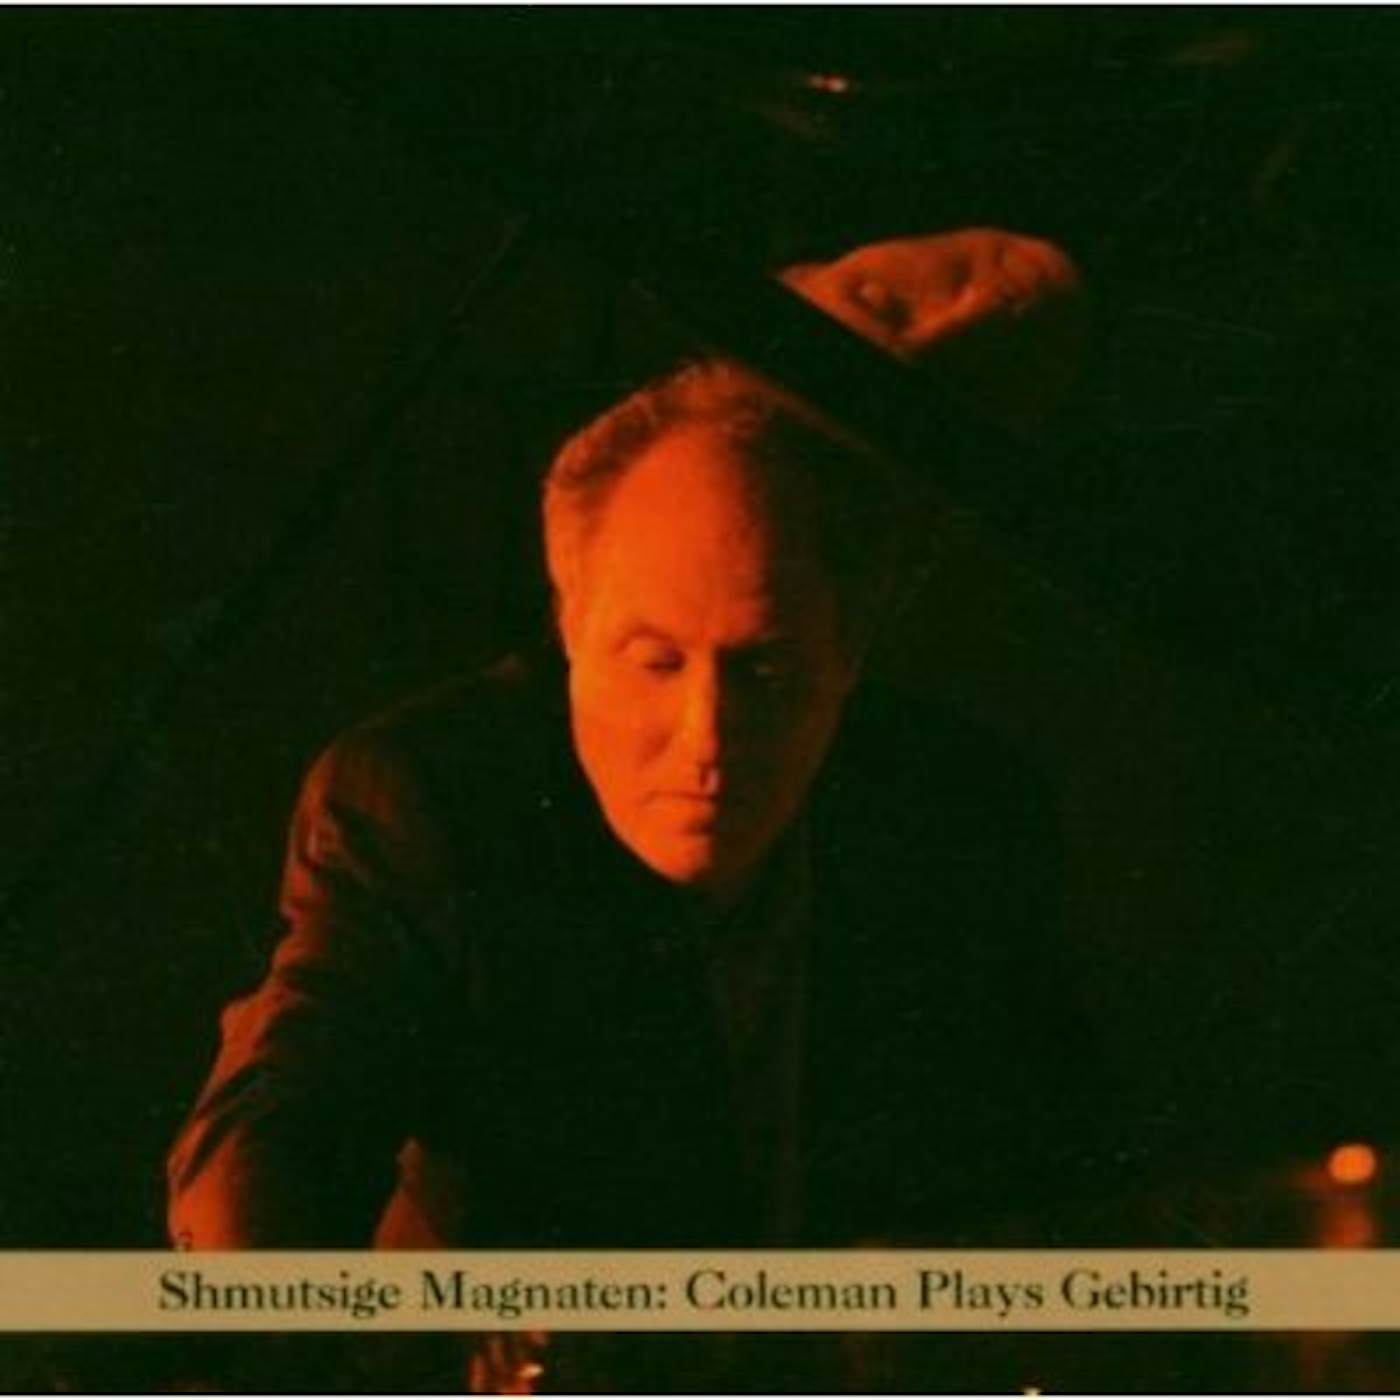 Anthony Coleman SHMUTSIGE MAGNATEN: COLEMAN PLAYS GEBURTIG CD